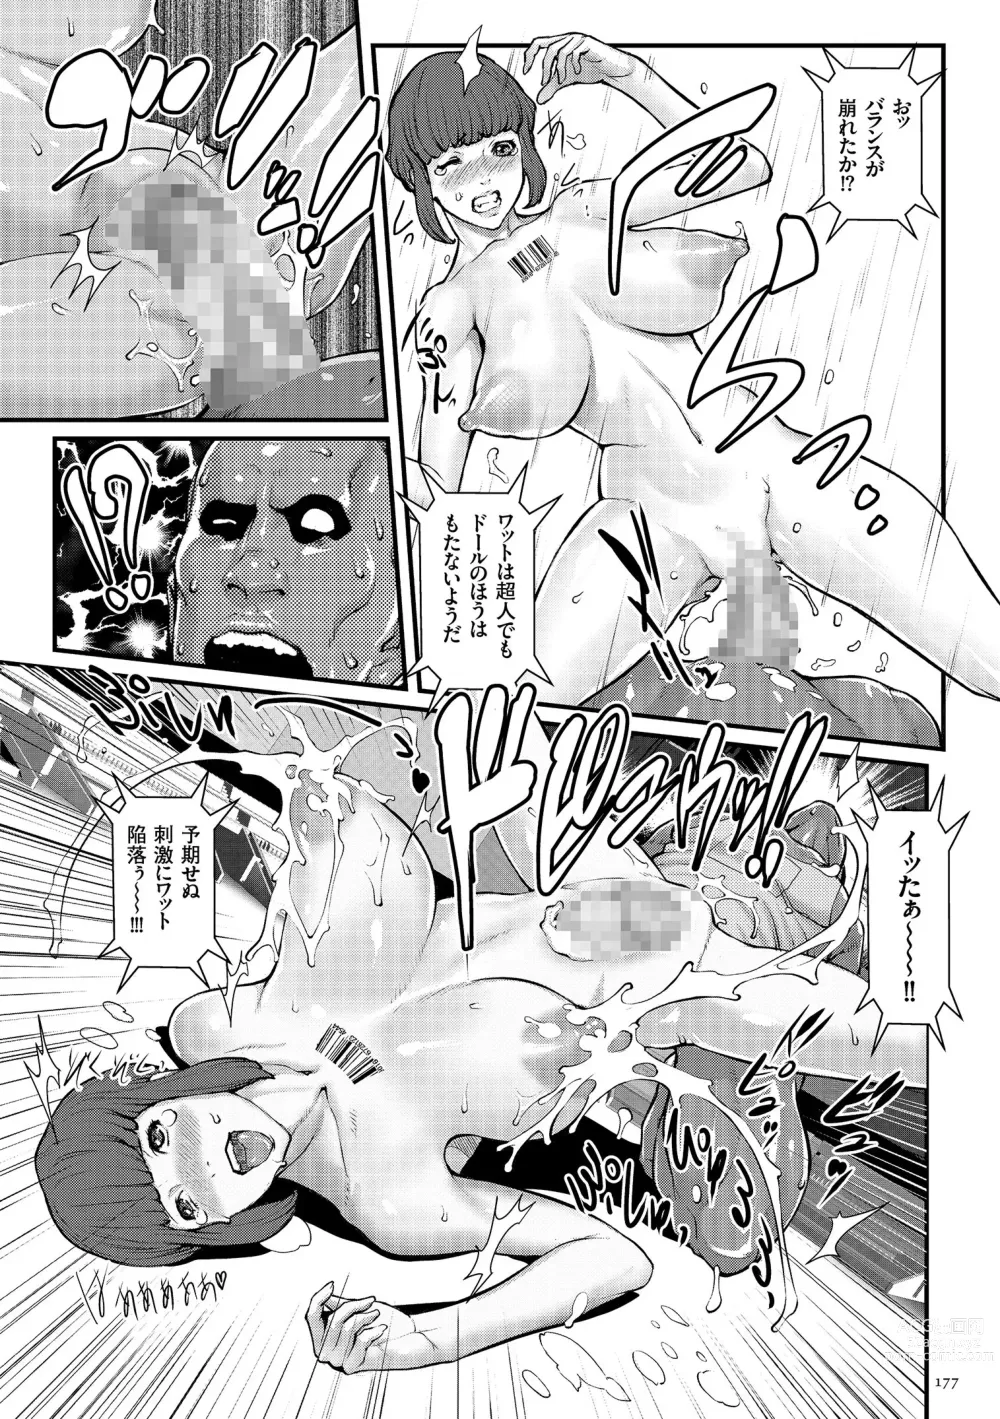 Page 179 of manga Chakushou! Haramase Island